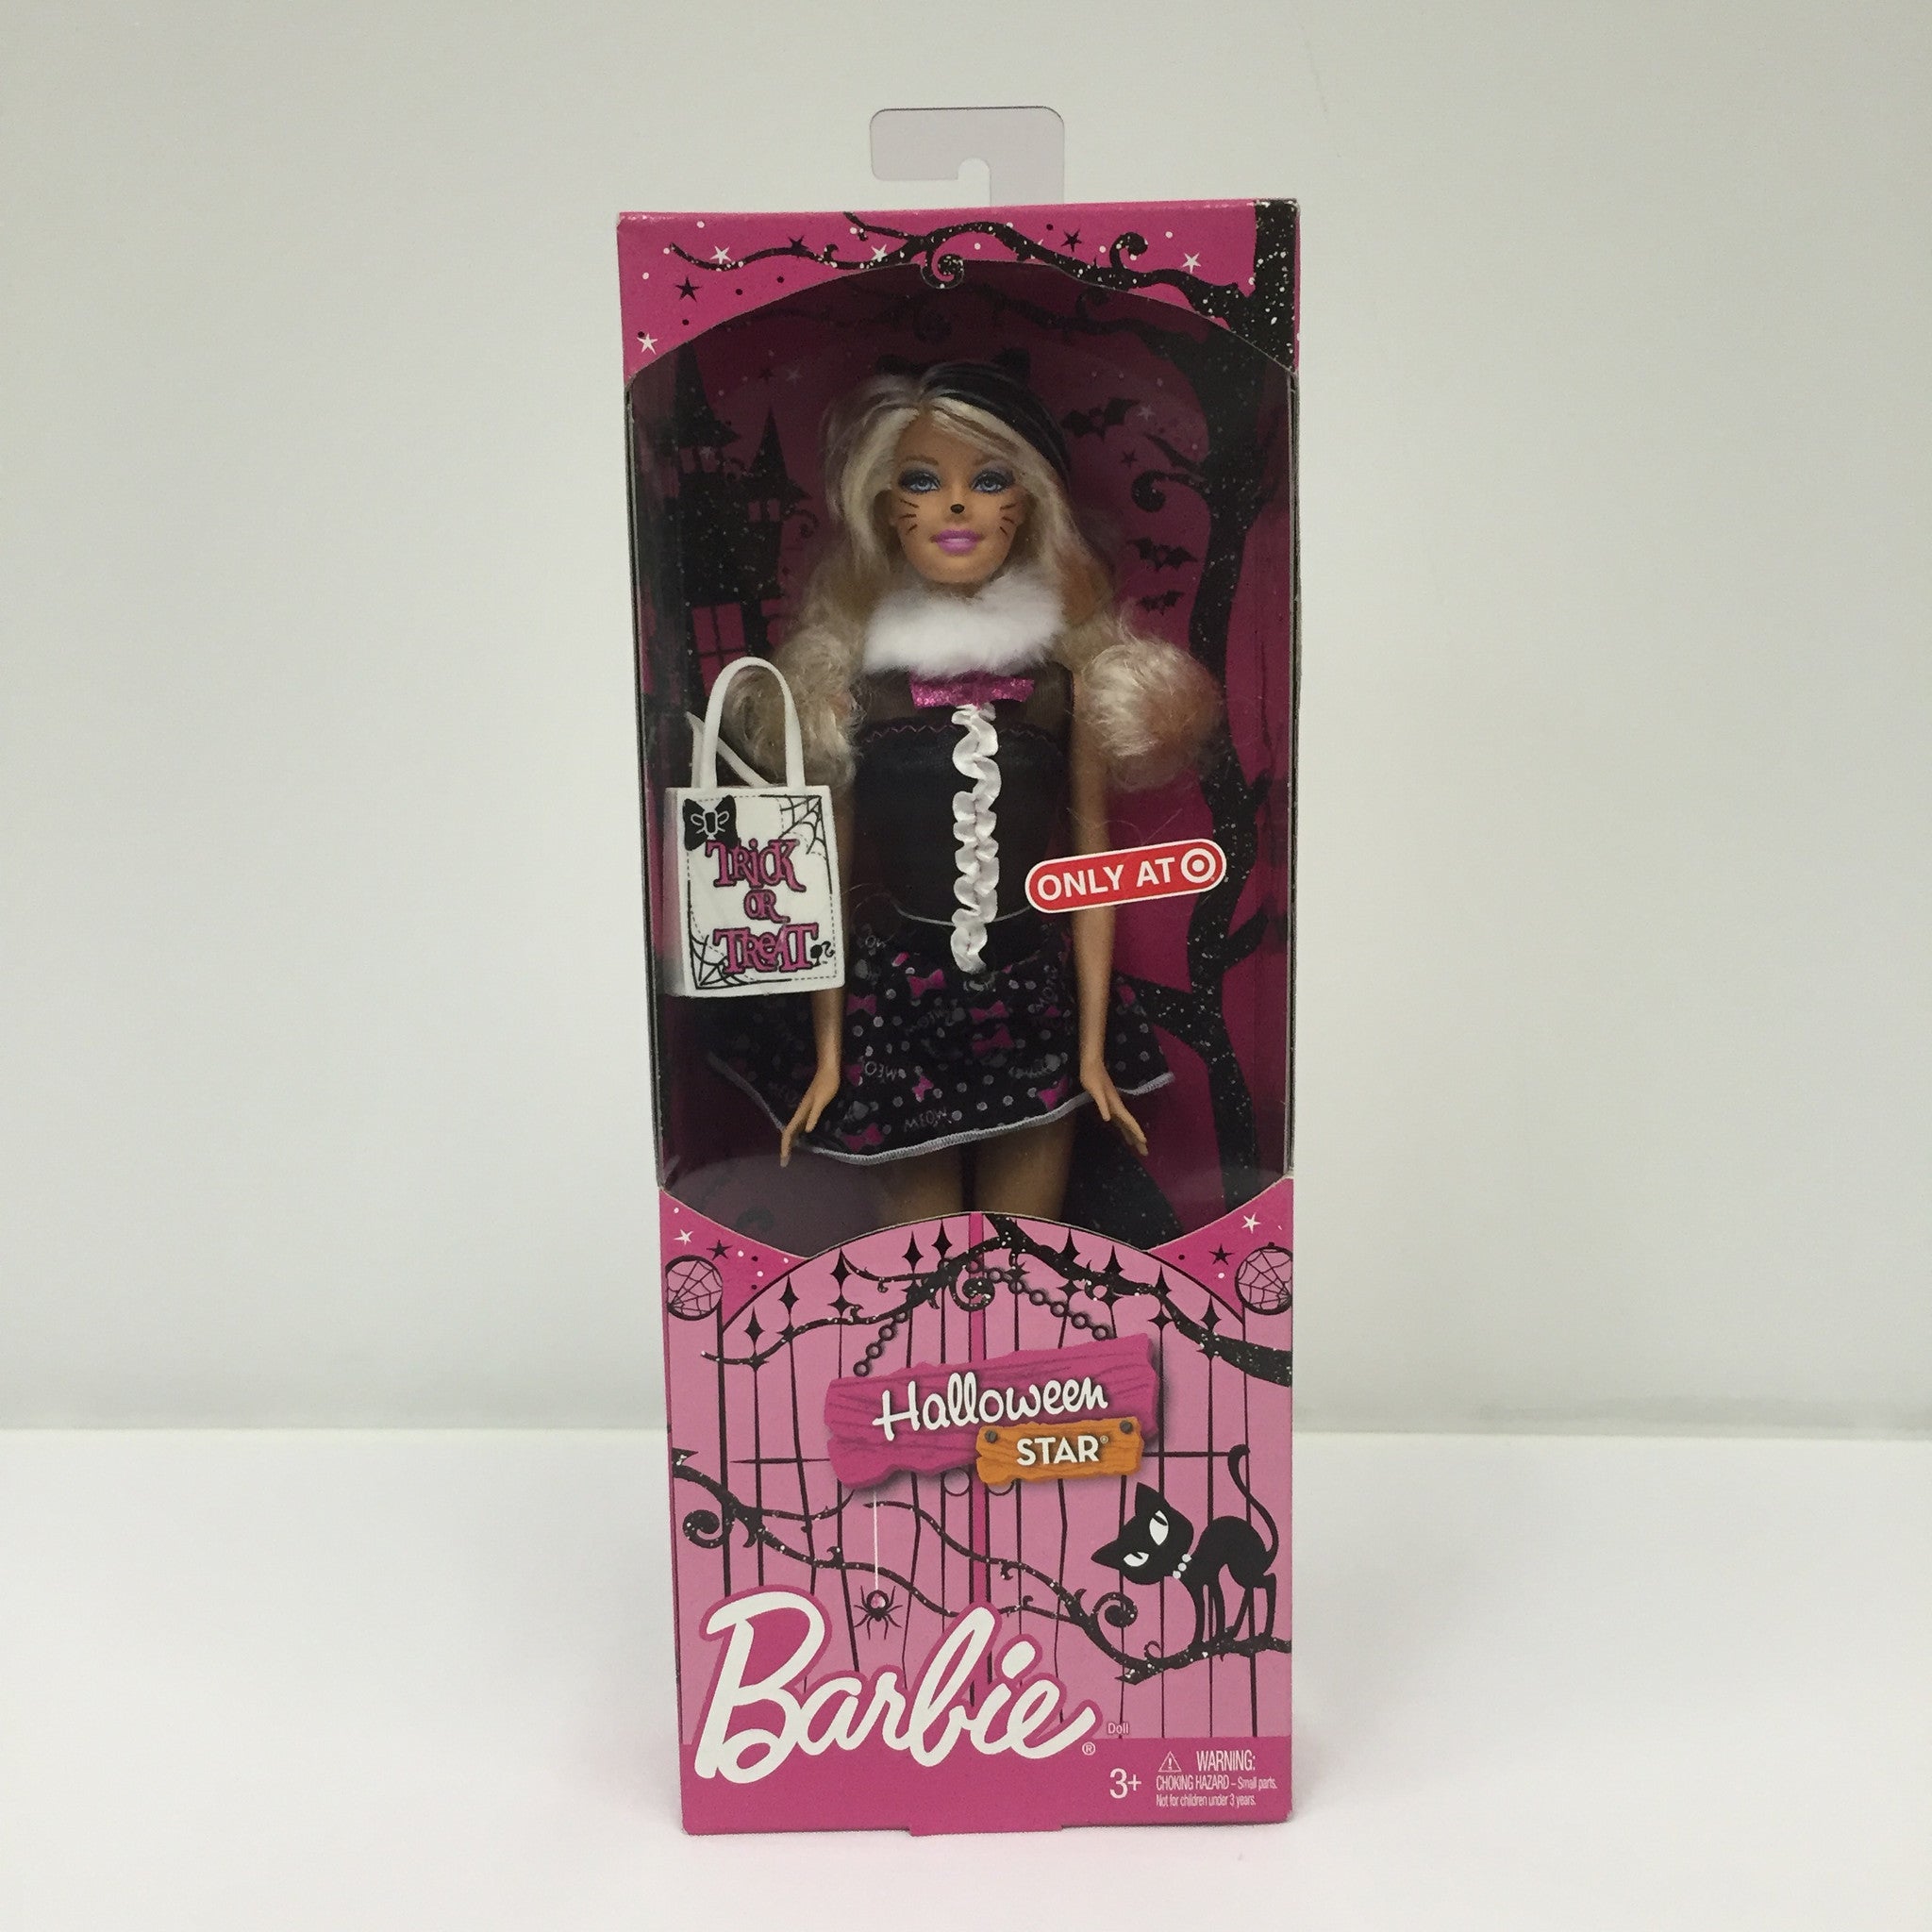 Barbie Doll Halloween Star 2012 (Target Exclusive)